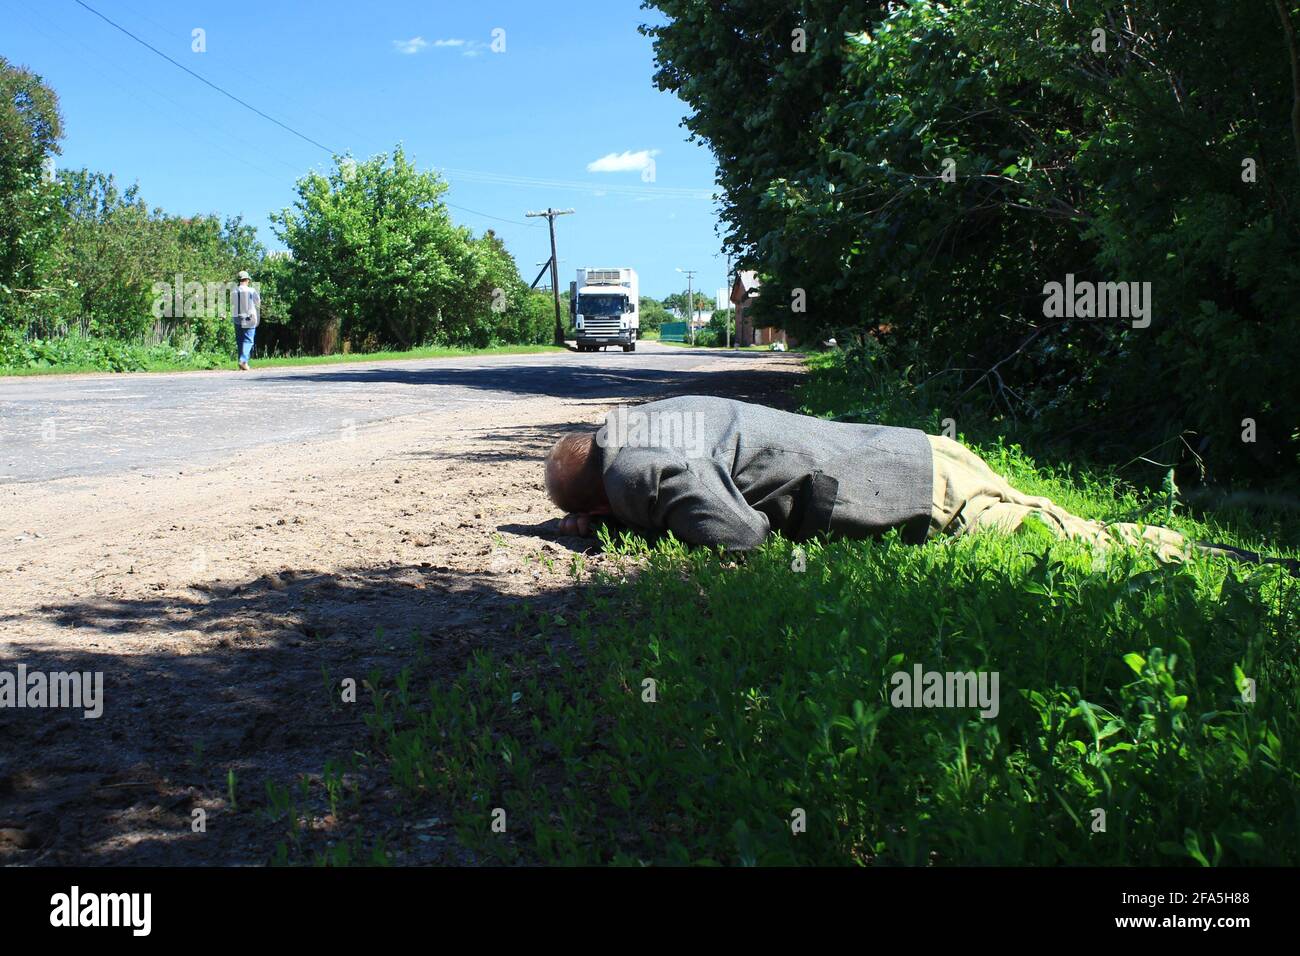 Novgorod, Russia, Aleksandr Kirillov - 06202012: 'A very drunk man sleeps on the ground' Stock Photo